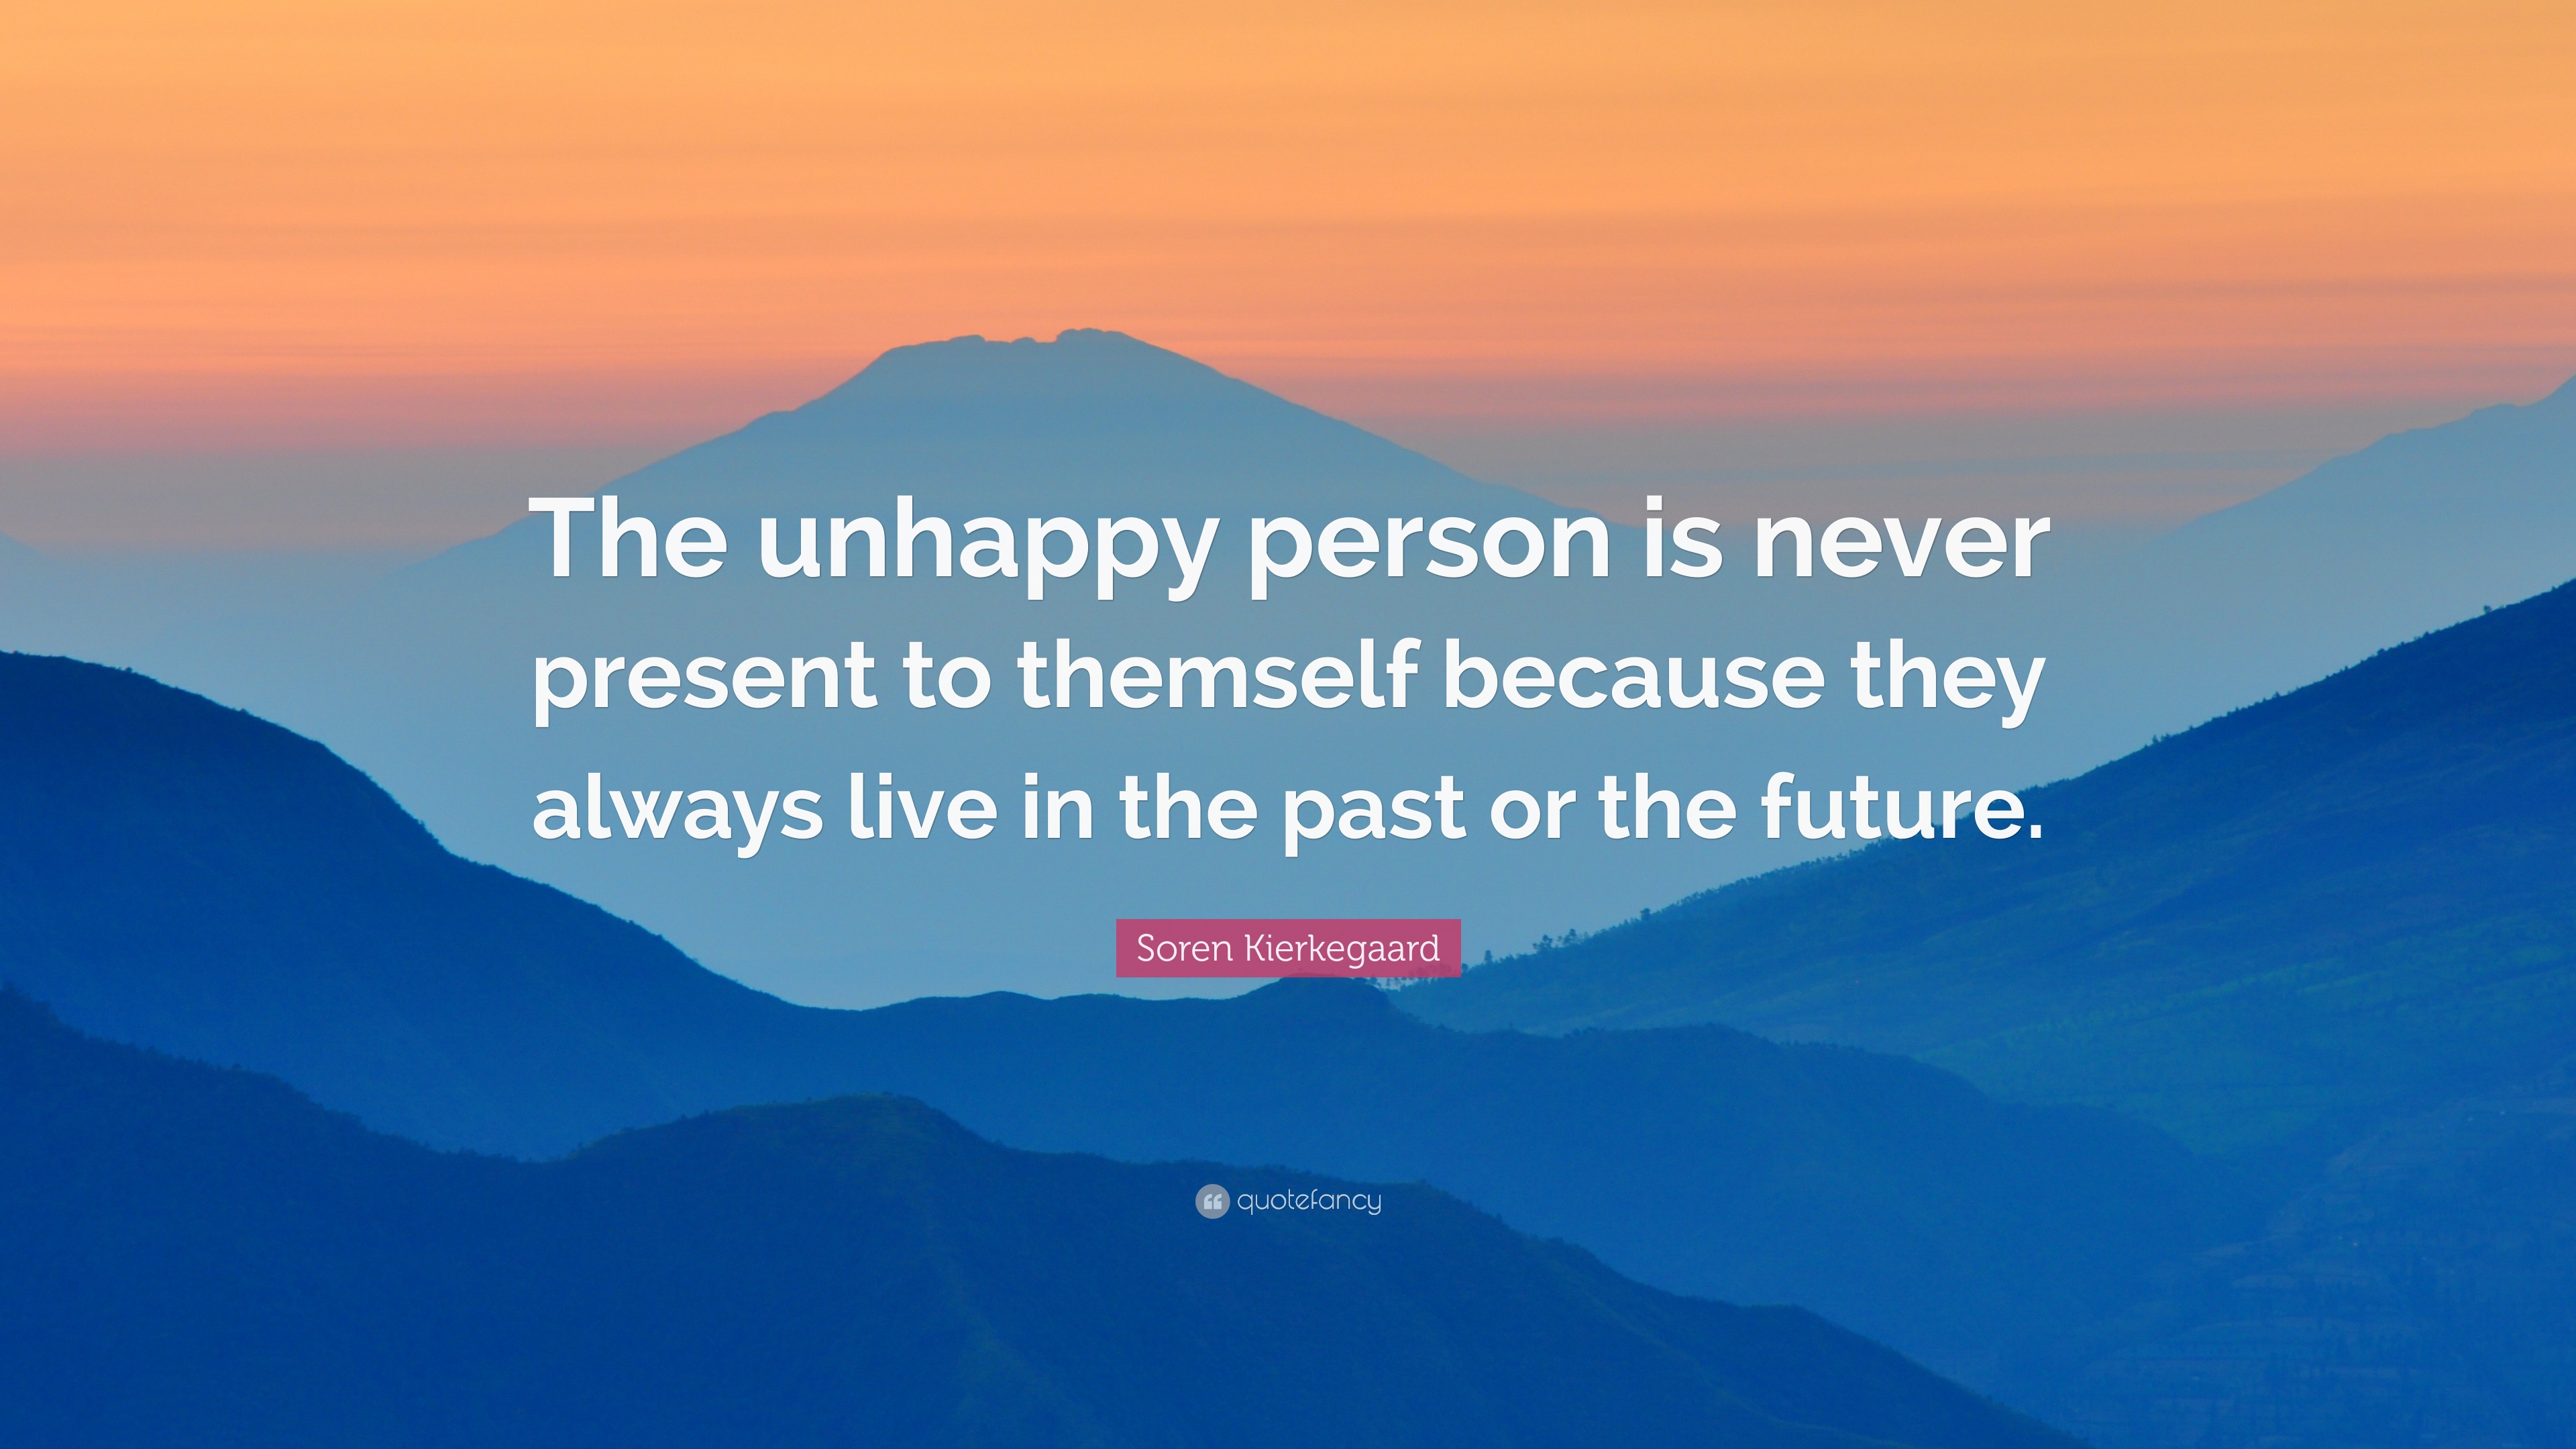 Soren Kierkegaard Quote: “The unhappy person is never present to